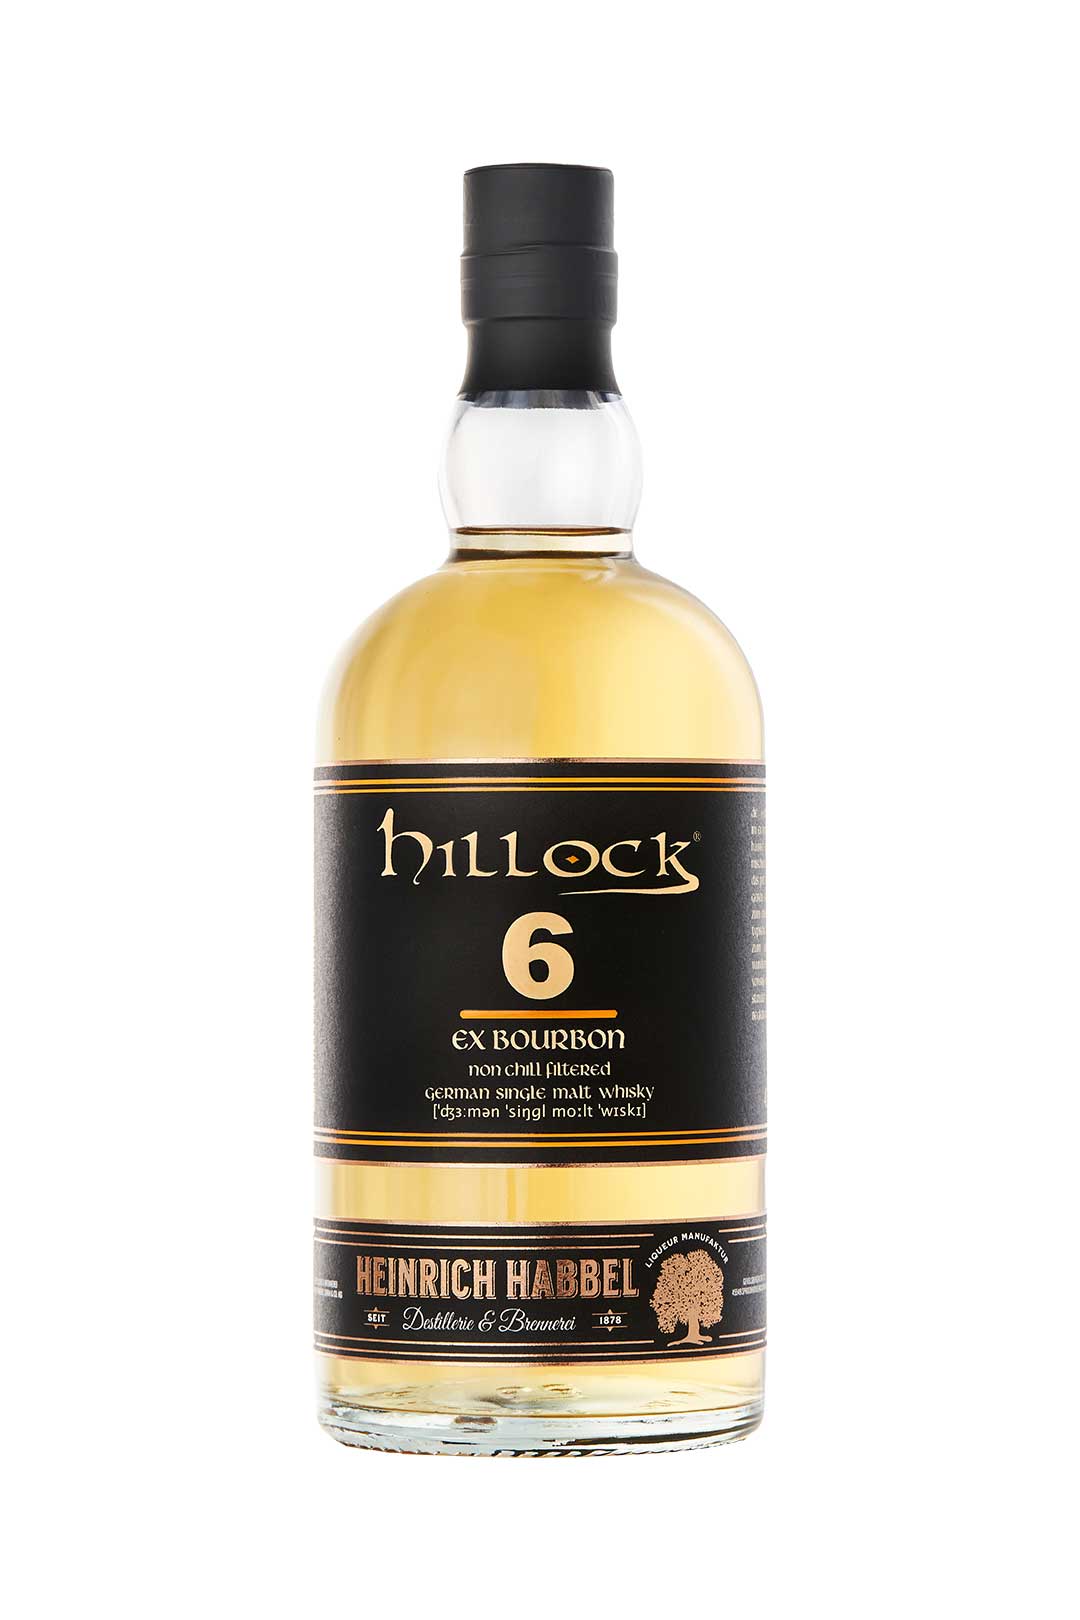 Hillock 6 Ex Bourbon